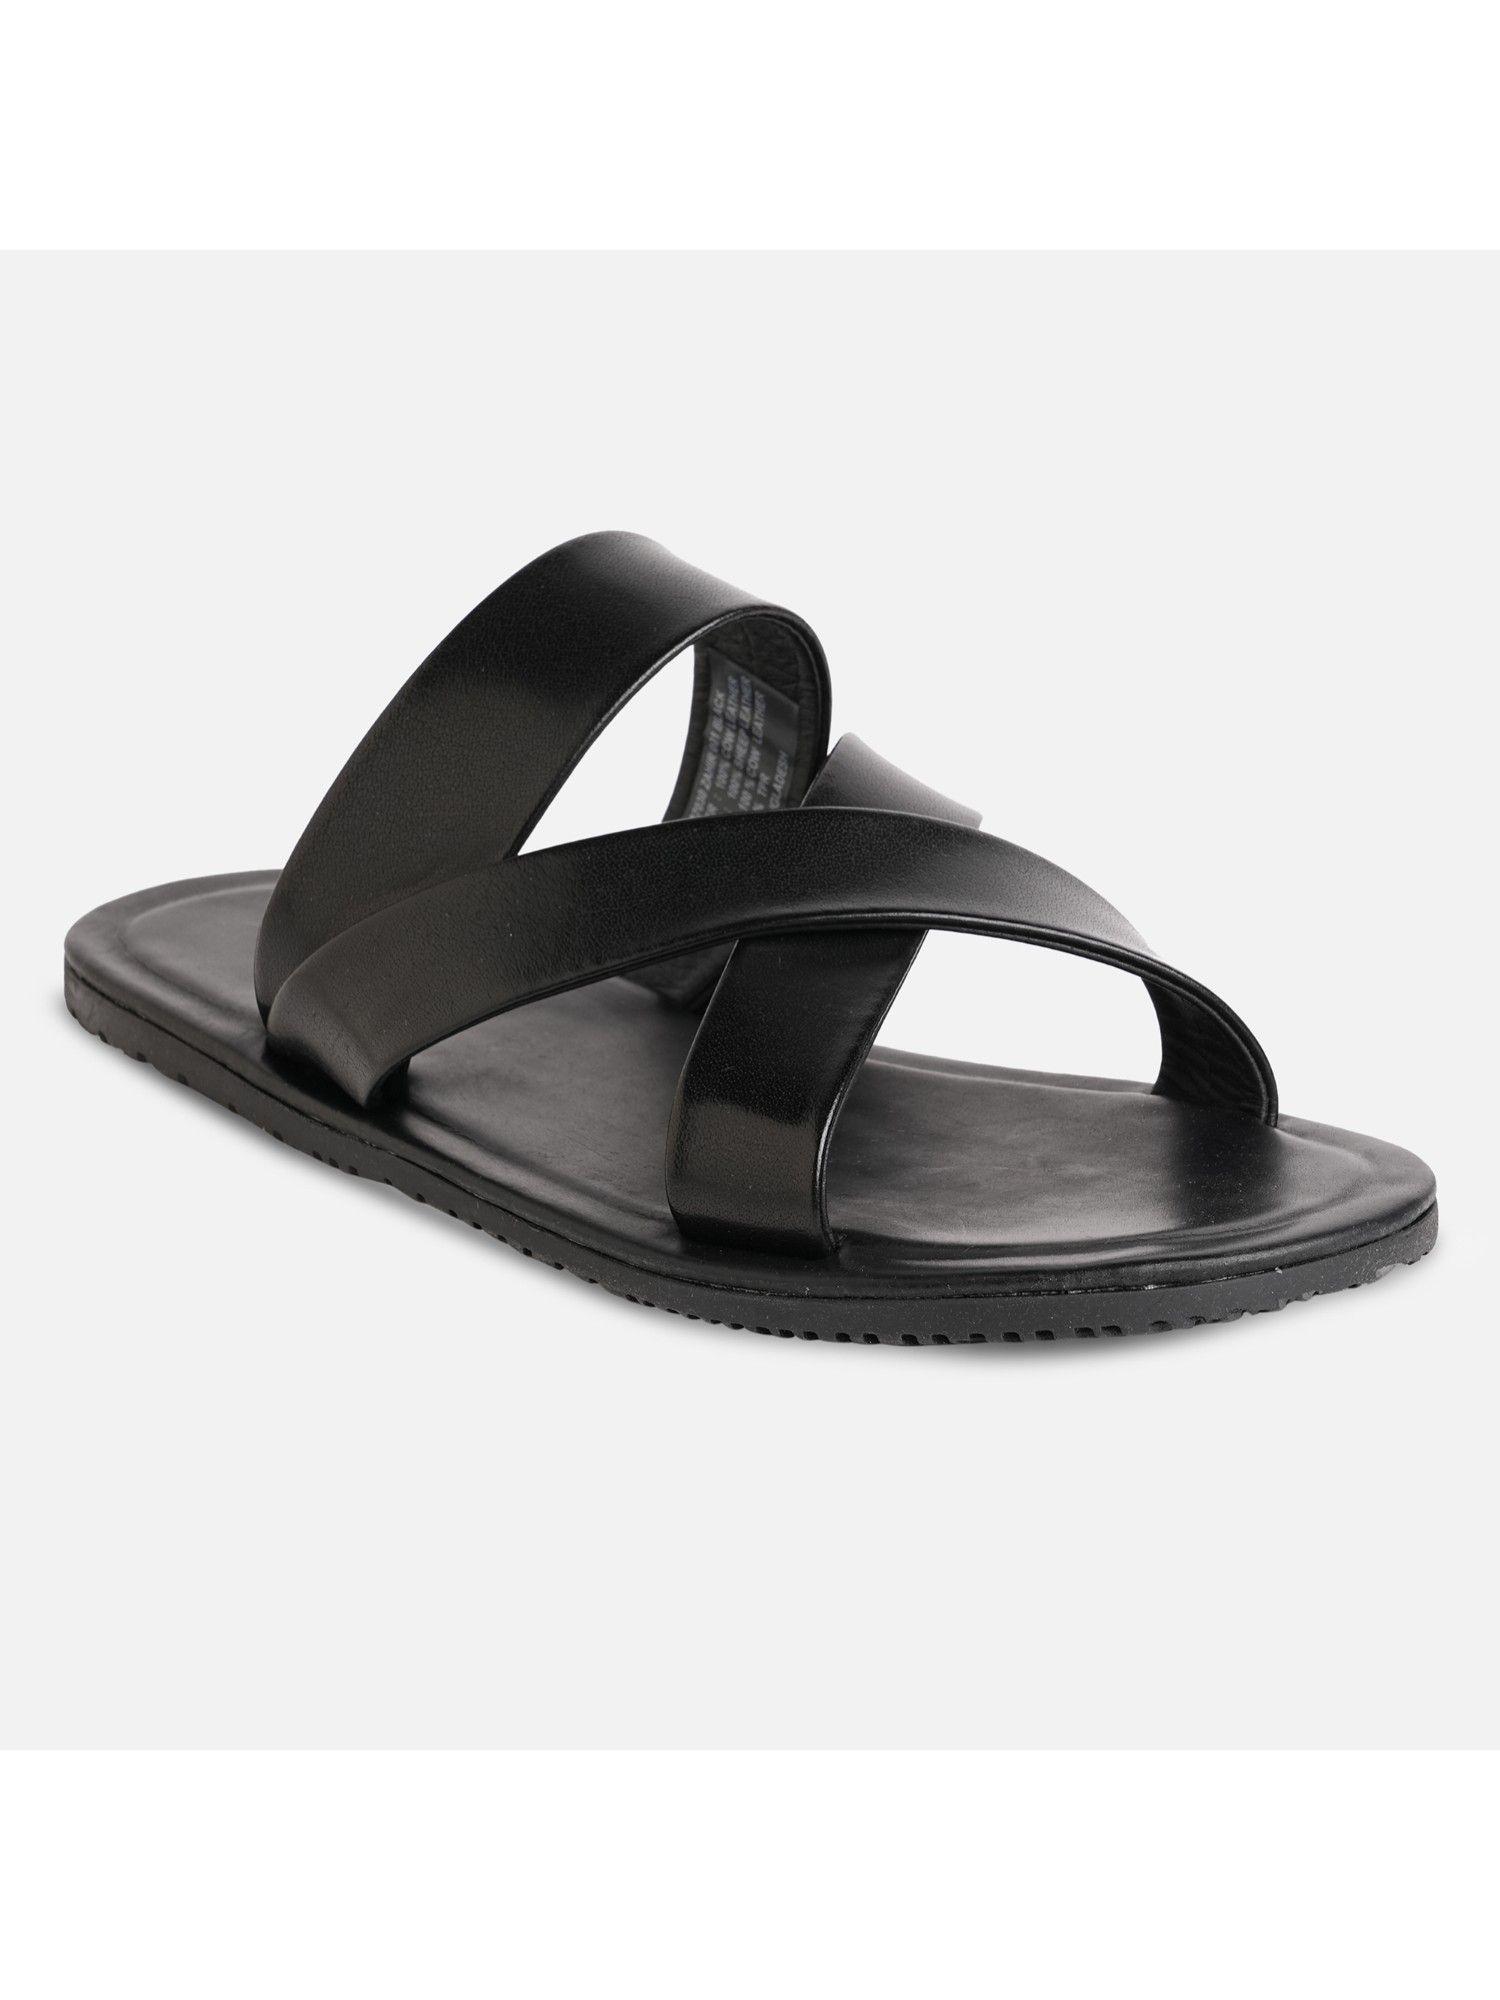 zahir leather black solid sandals